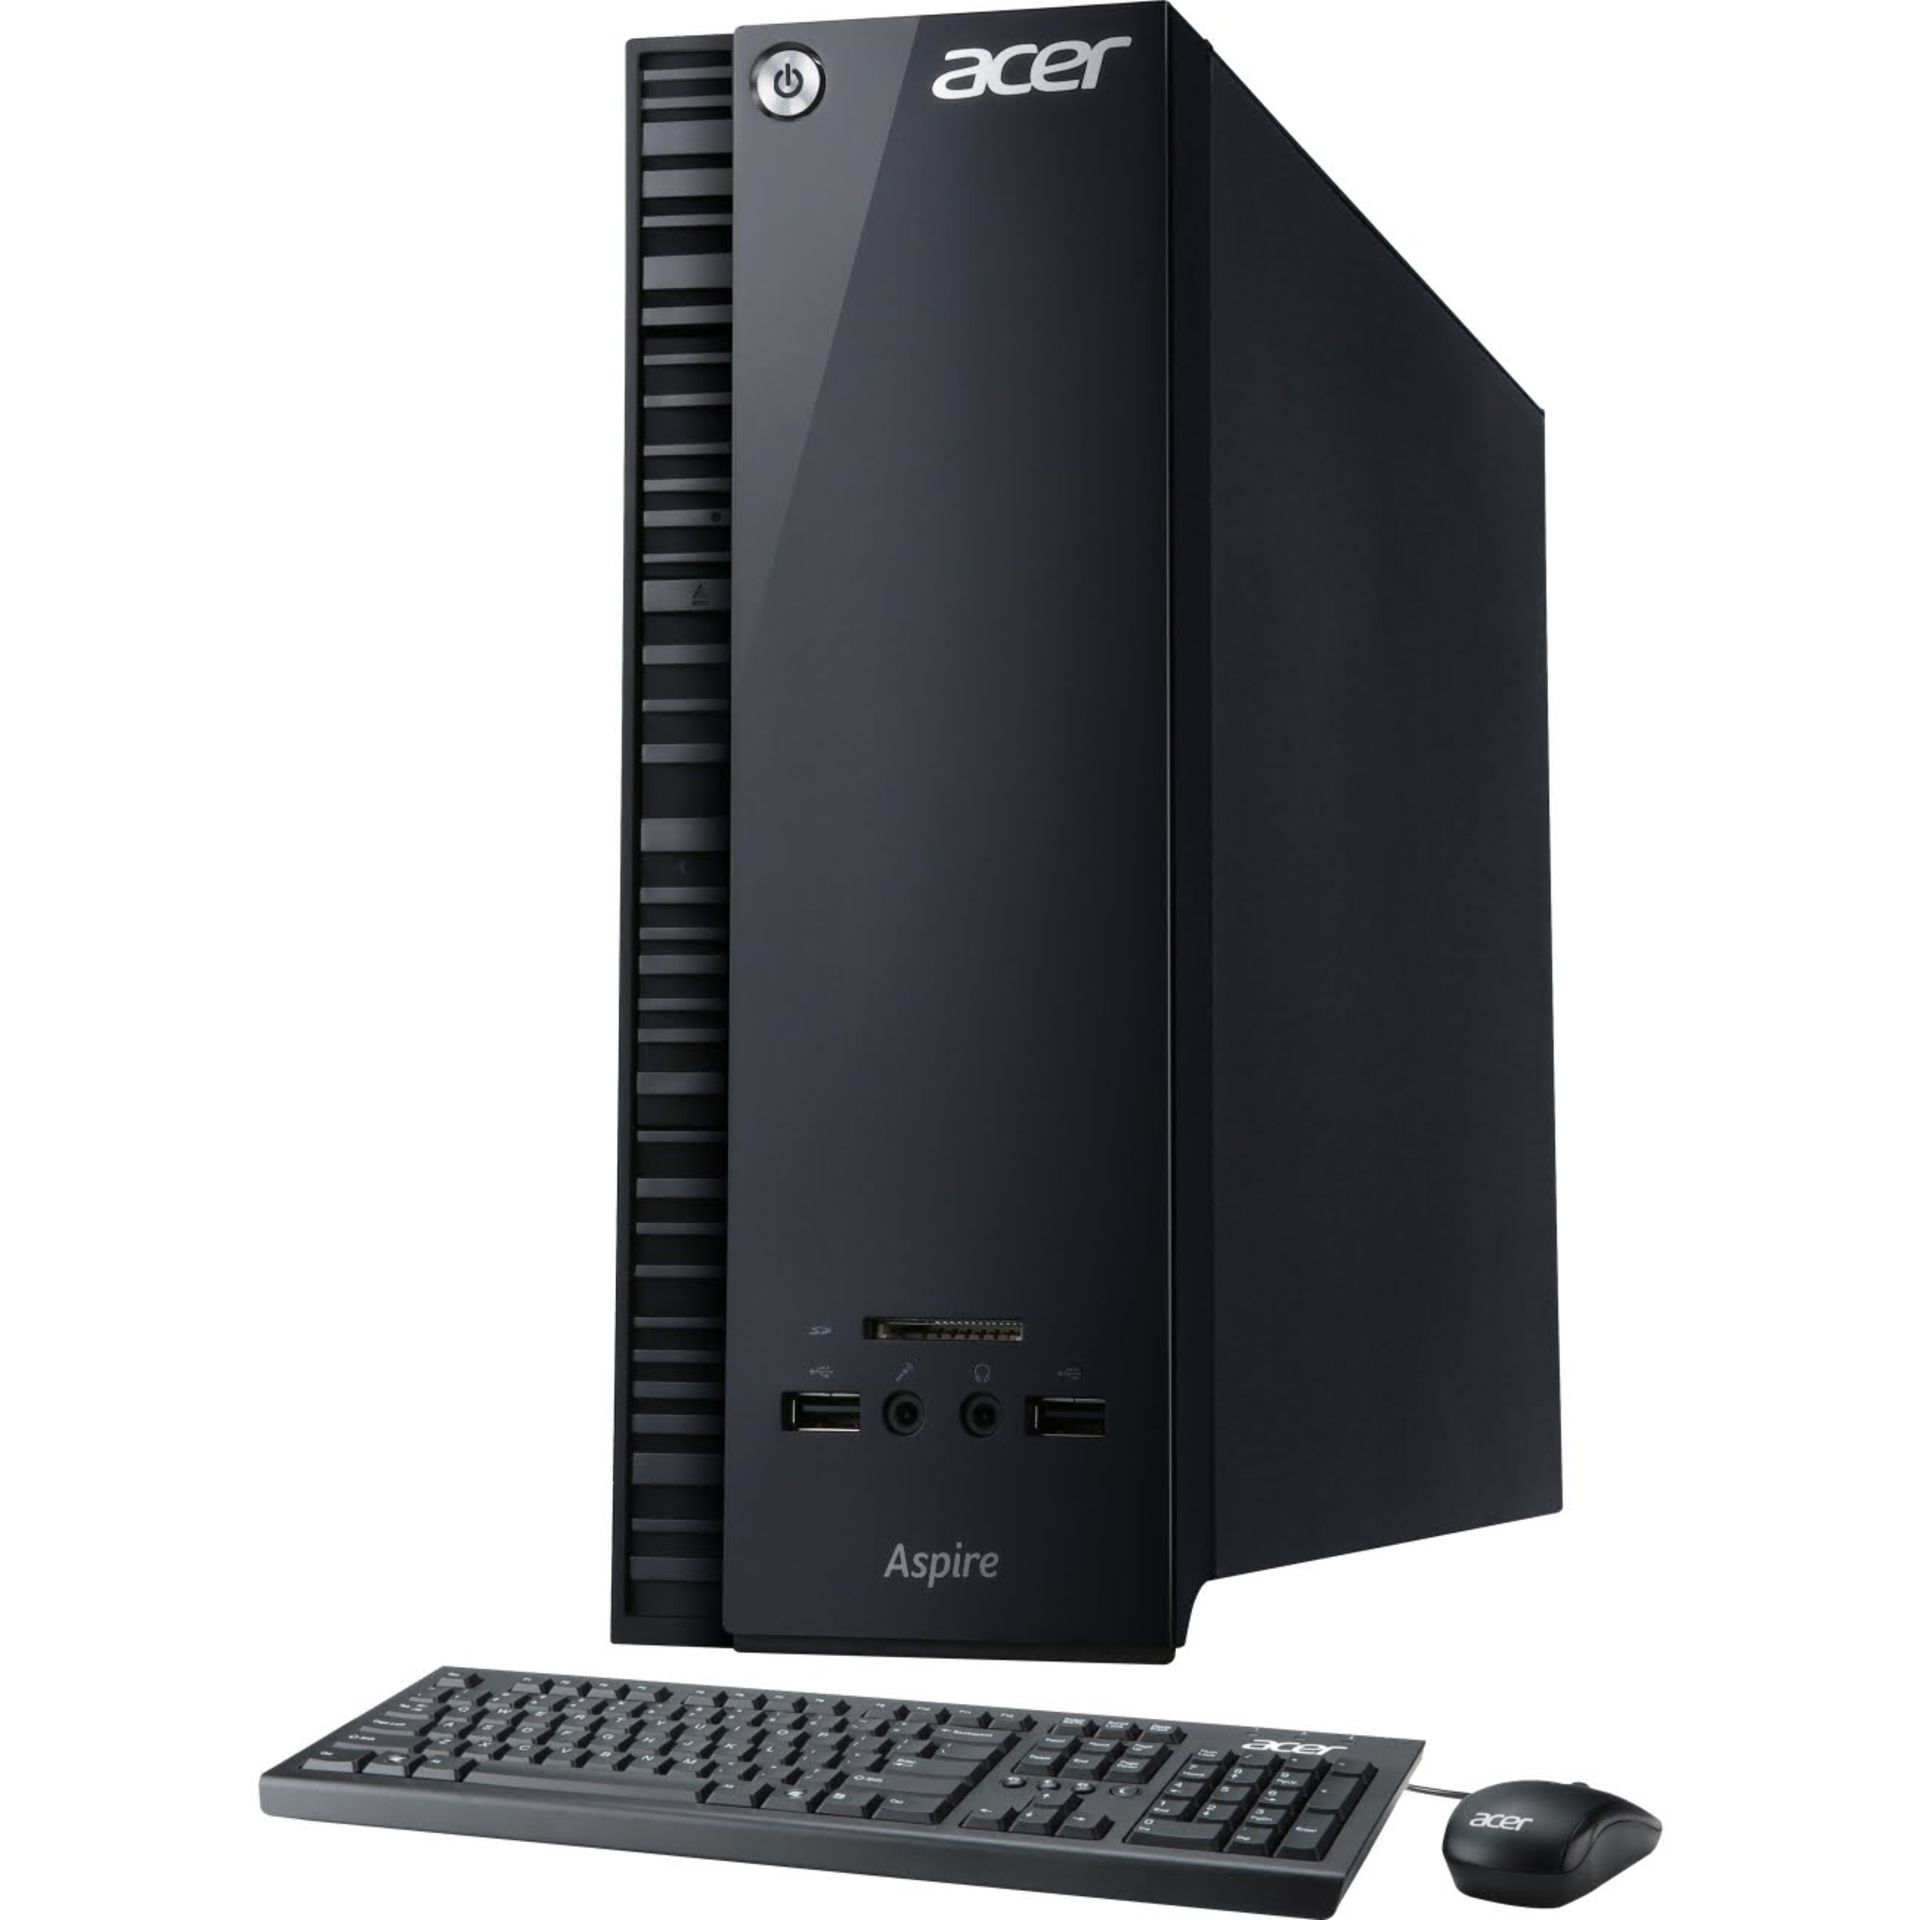 Grade A Acer Aspire Xc-704 Computer With 8GB DDR3 RAM, 2TB Hard Drive, USB Keyboard, USB Optical